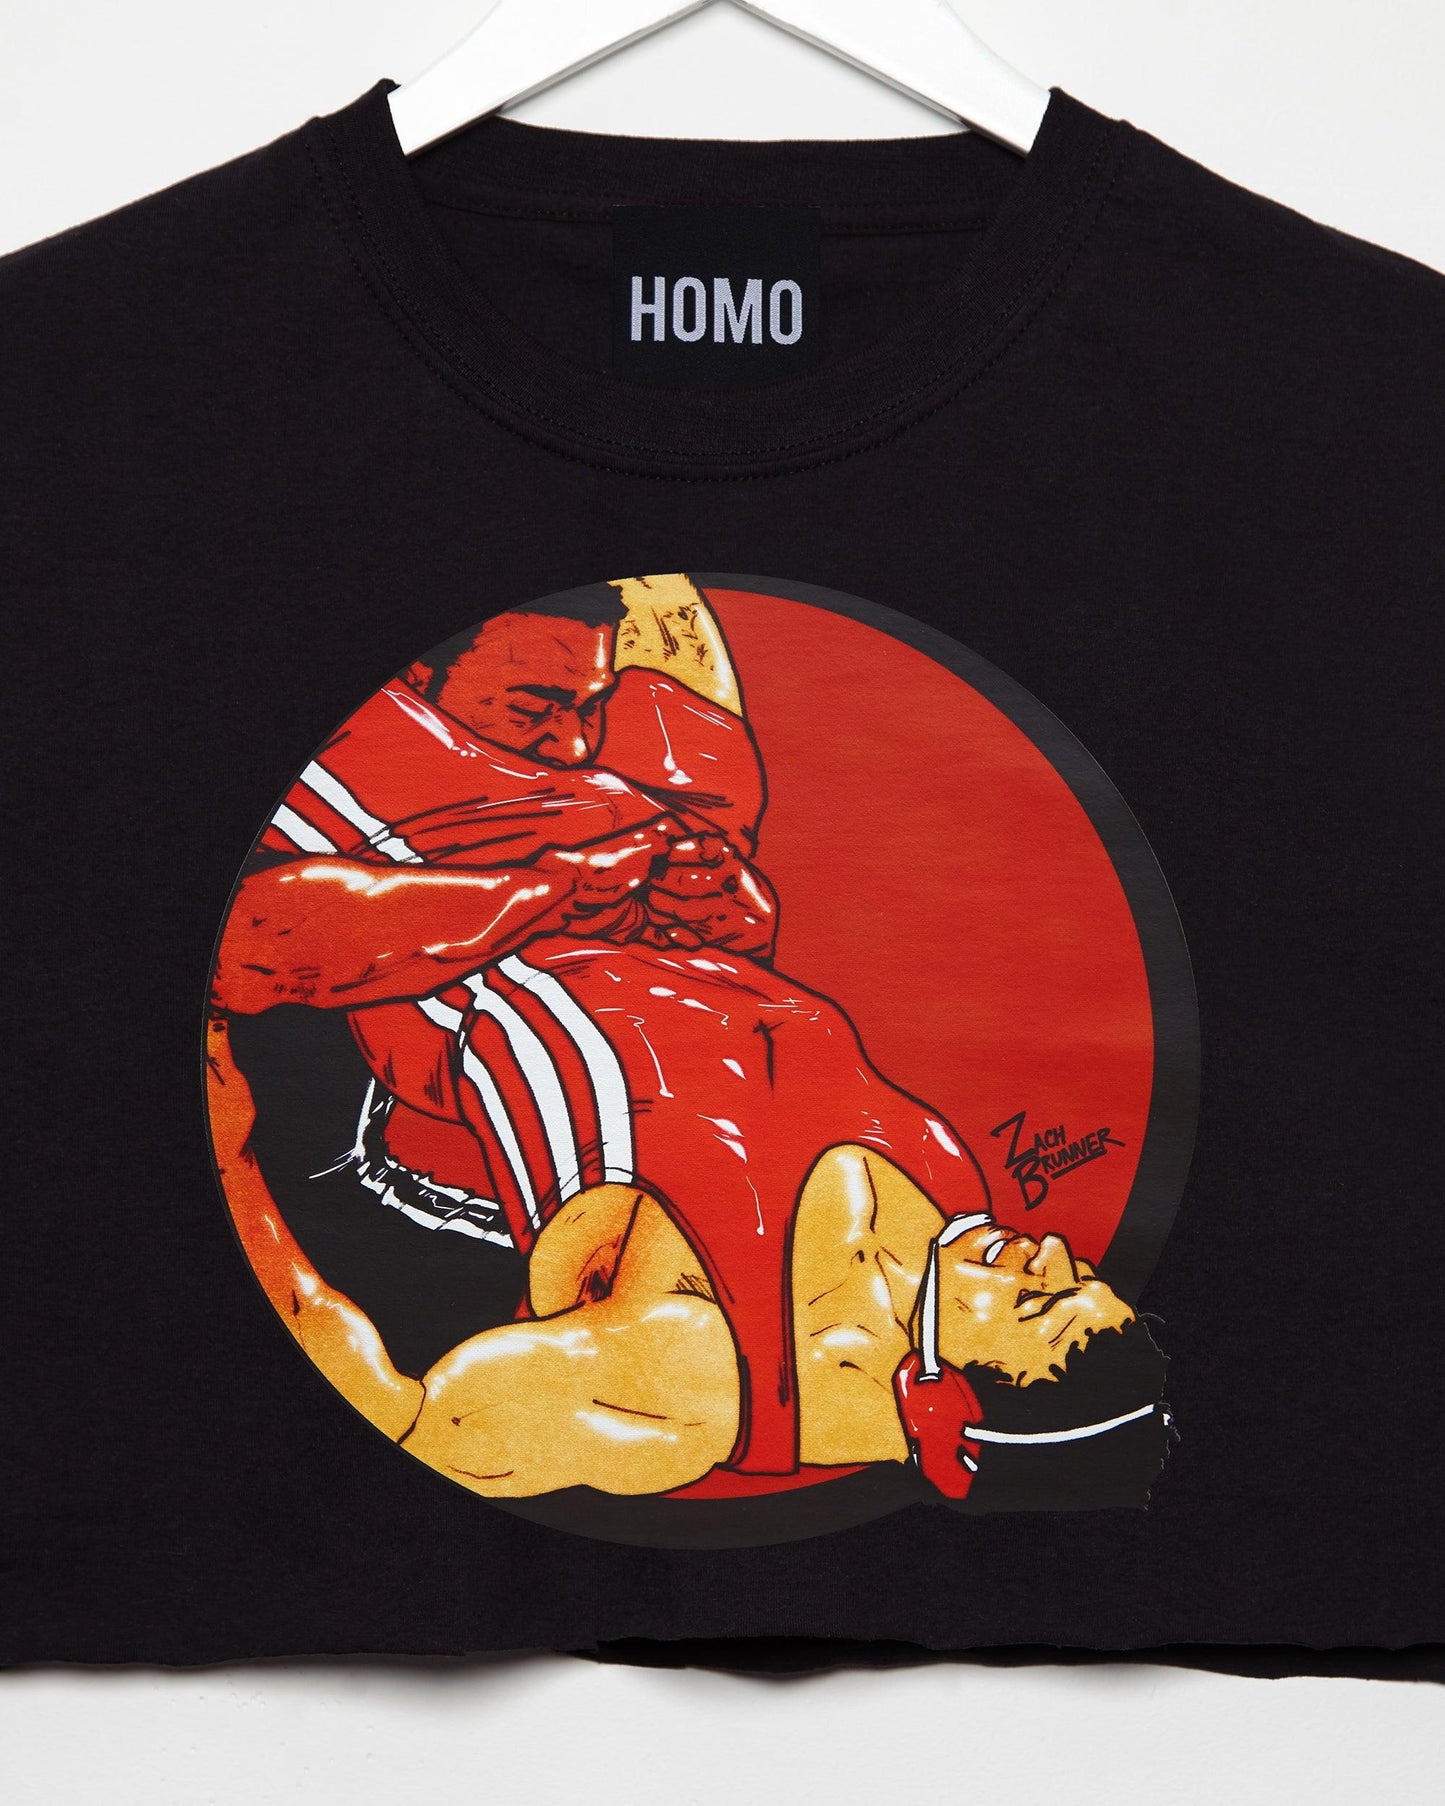 Team red, lets wrestle - mens sleeveless crop top - HOMOLONDON